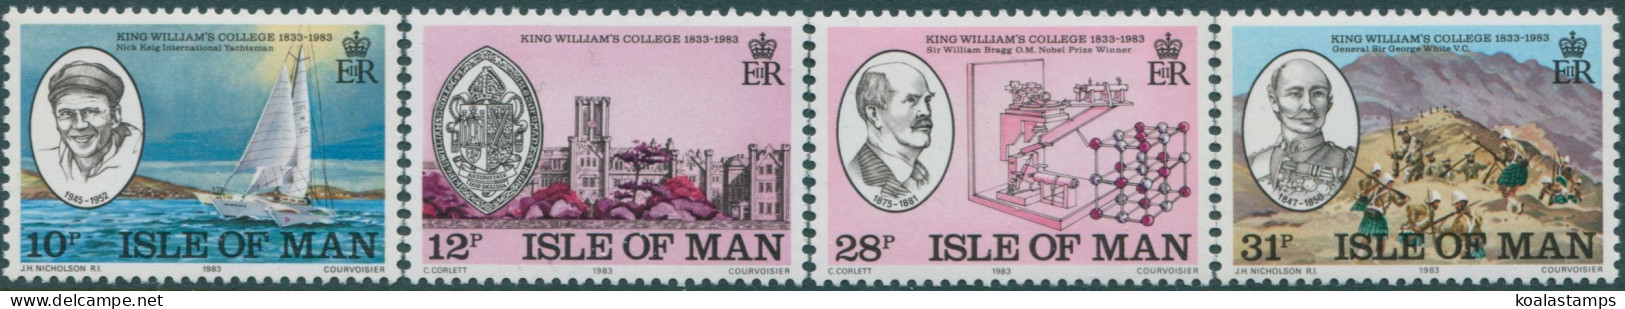 Isle Of Man 1983 SG251-254 King William College Set MNH - Isola Di Man